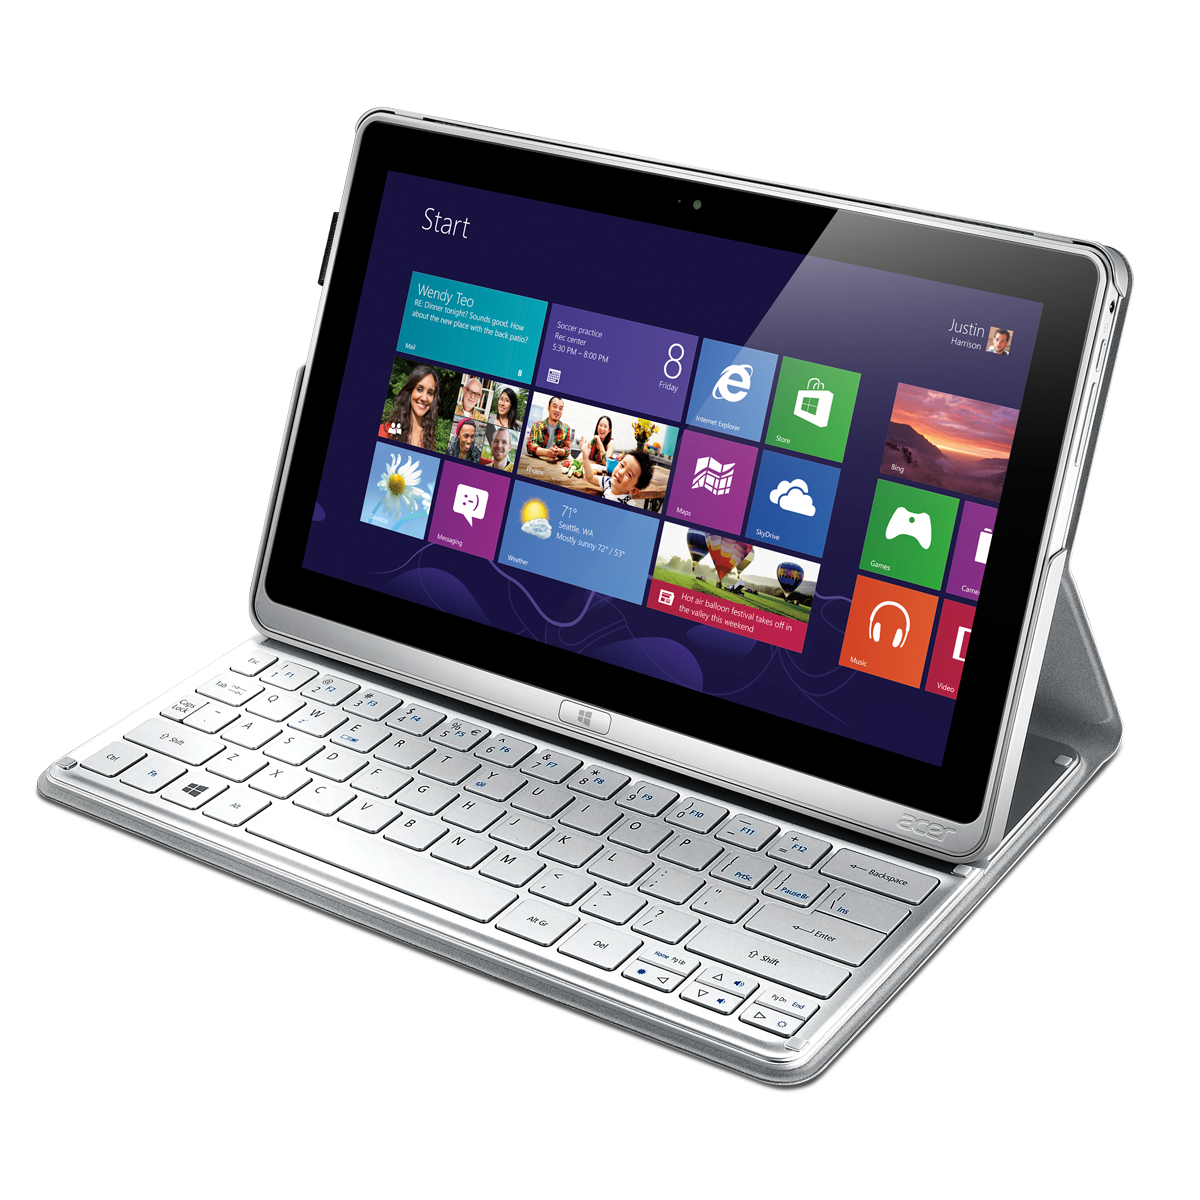 Ноутбук планшет Асер трансформер. Acer Aspire планшет с клавиатурой. Acer TRAVELMATE x313. Ноутбук-планшет трансформер Sony VAIO.